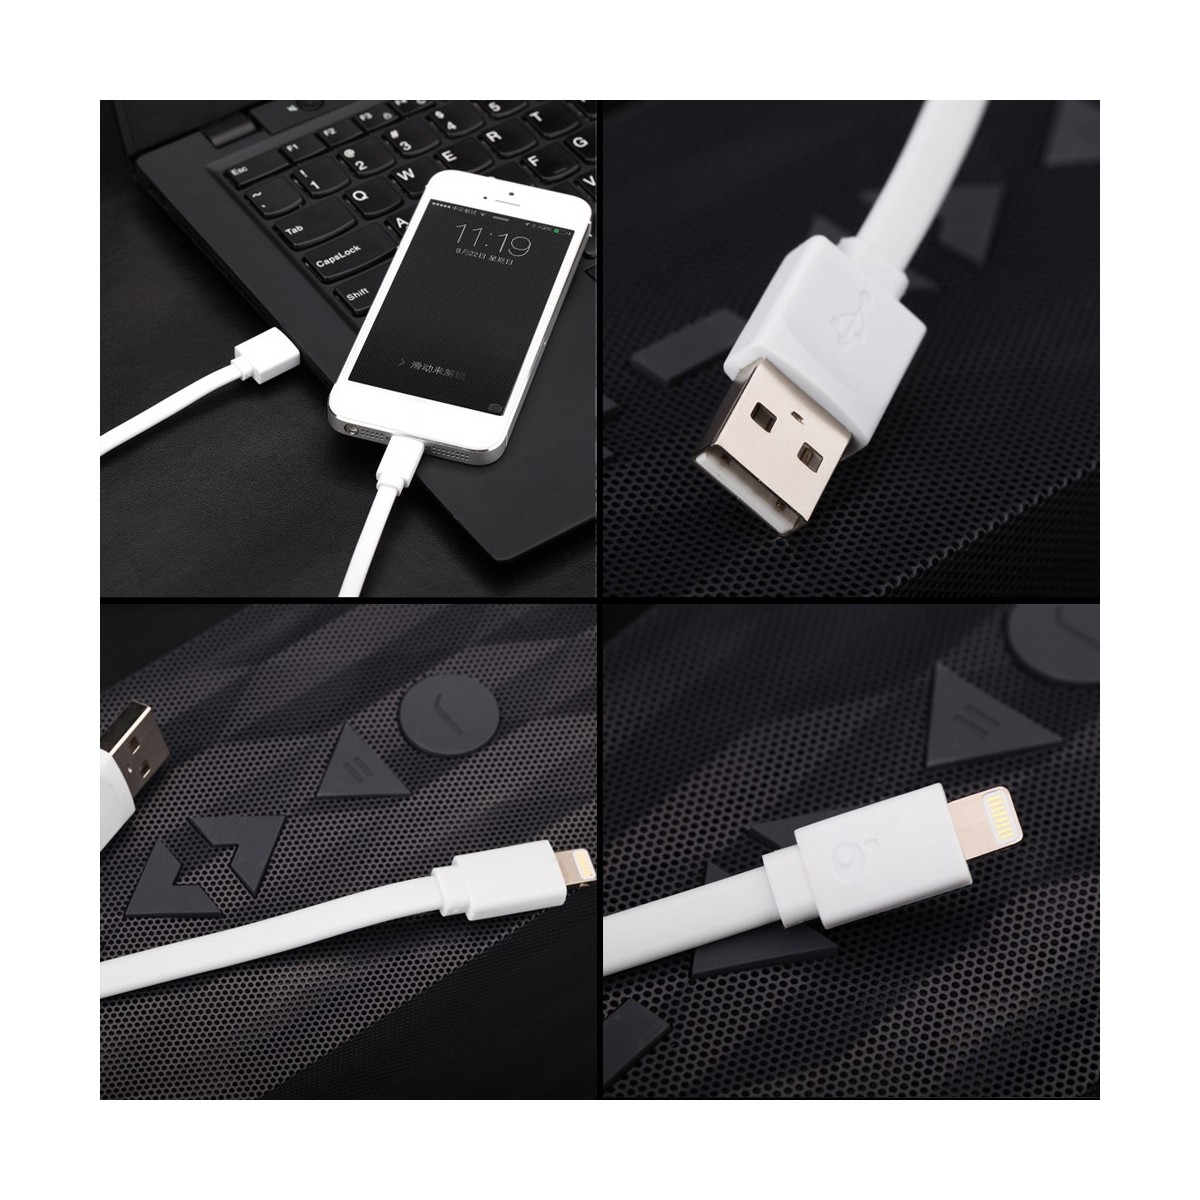 Câble USB vers Lightning Blanc 90cm